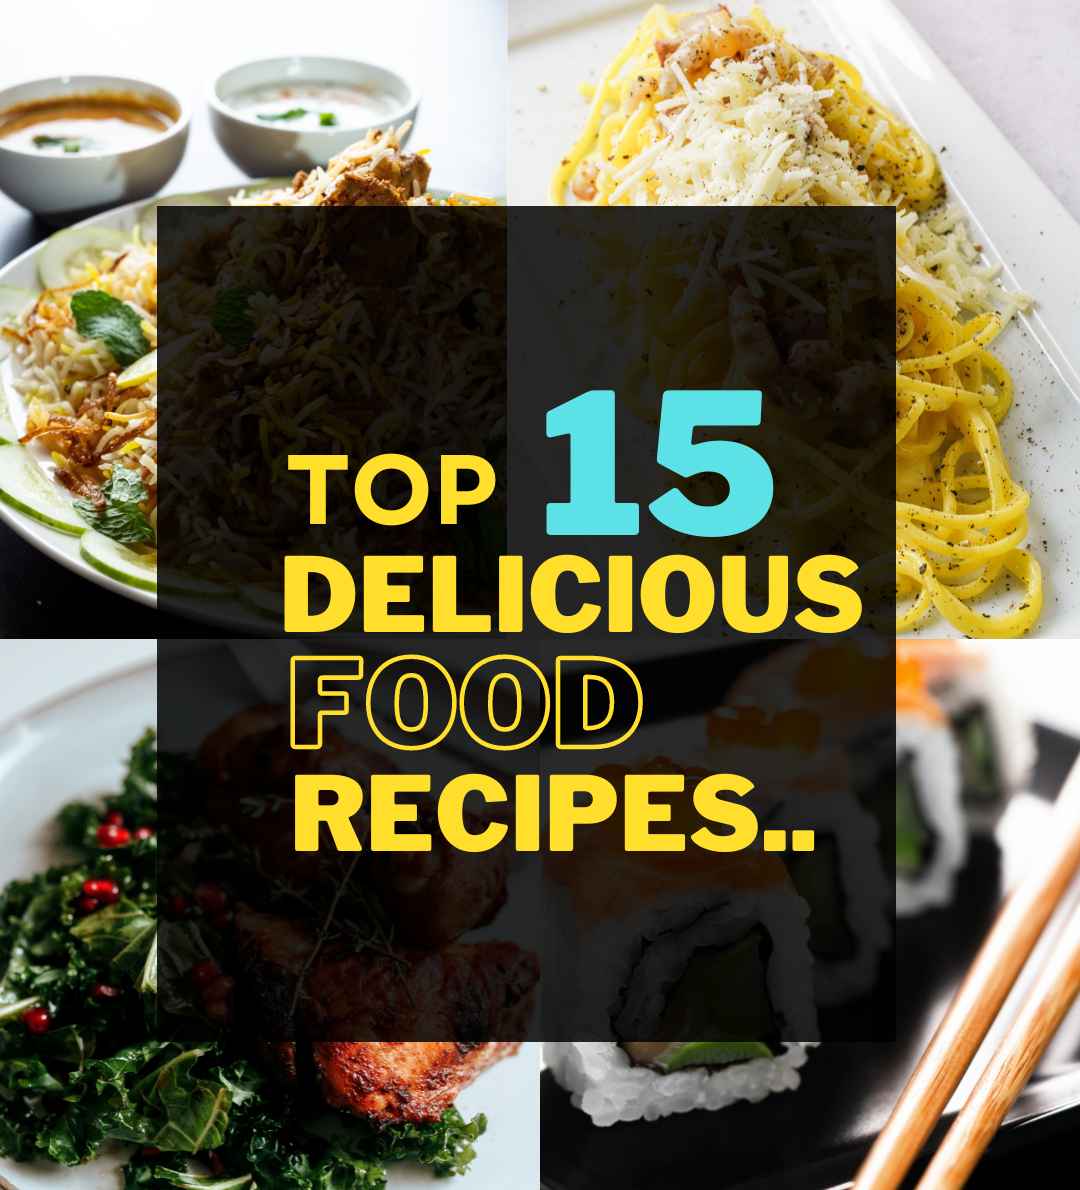 Top15 Delicious Food Recipes